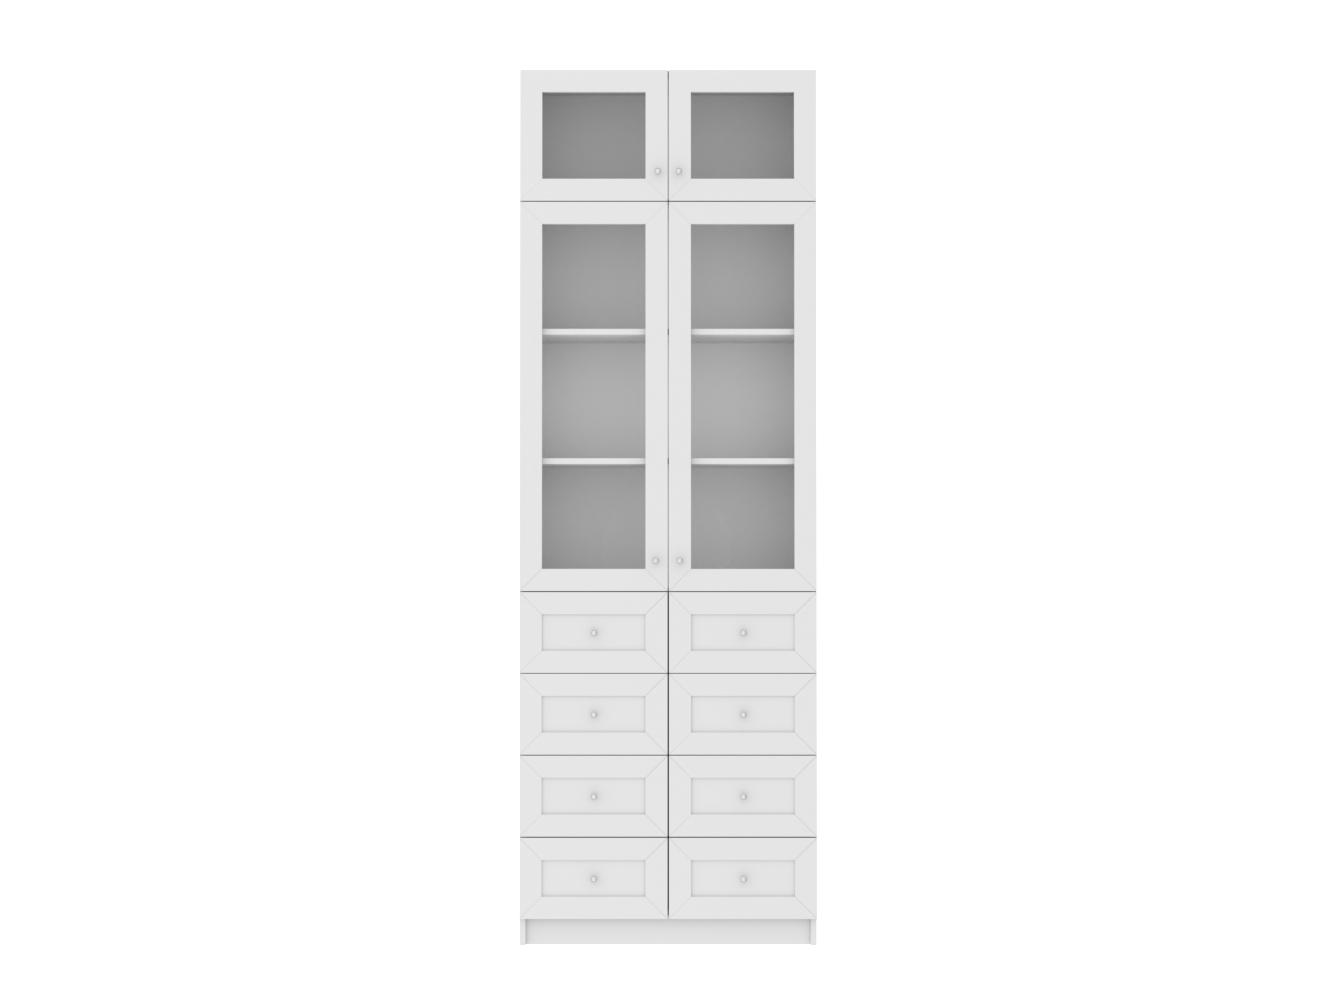 Книжный шкаф Билли 320 white ИКЕА (IKEA) изображение товара